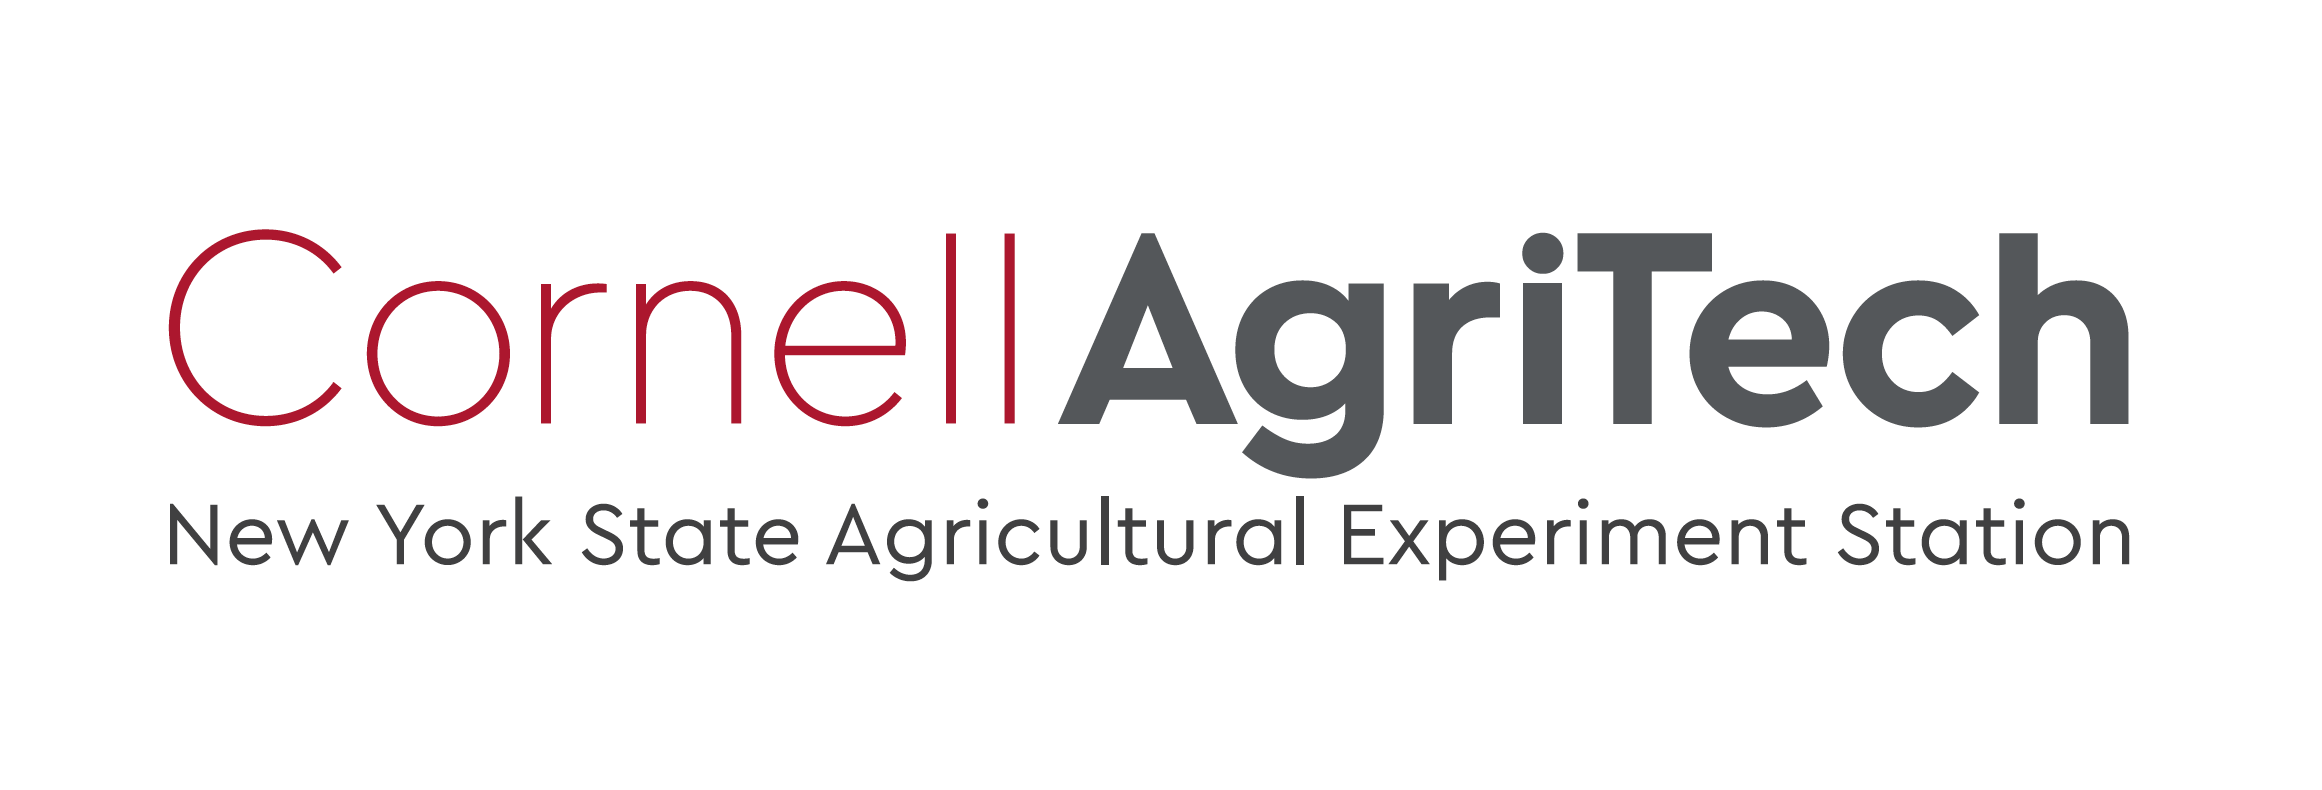 Cornell AgriTech offers Summer Research Scholars Program for Undergraduates